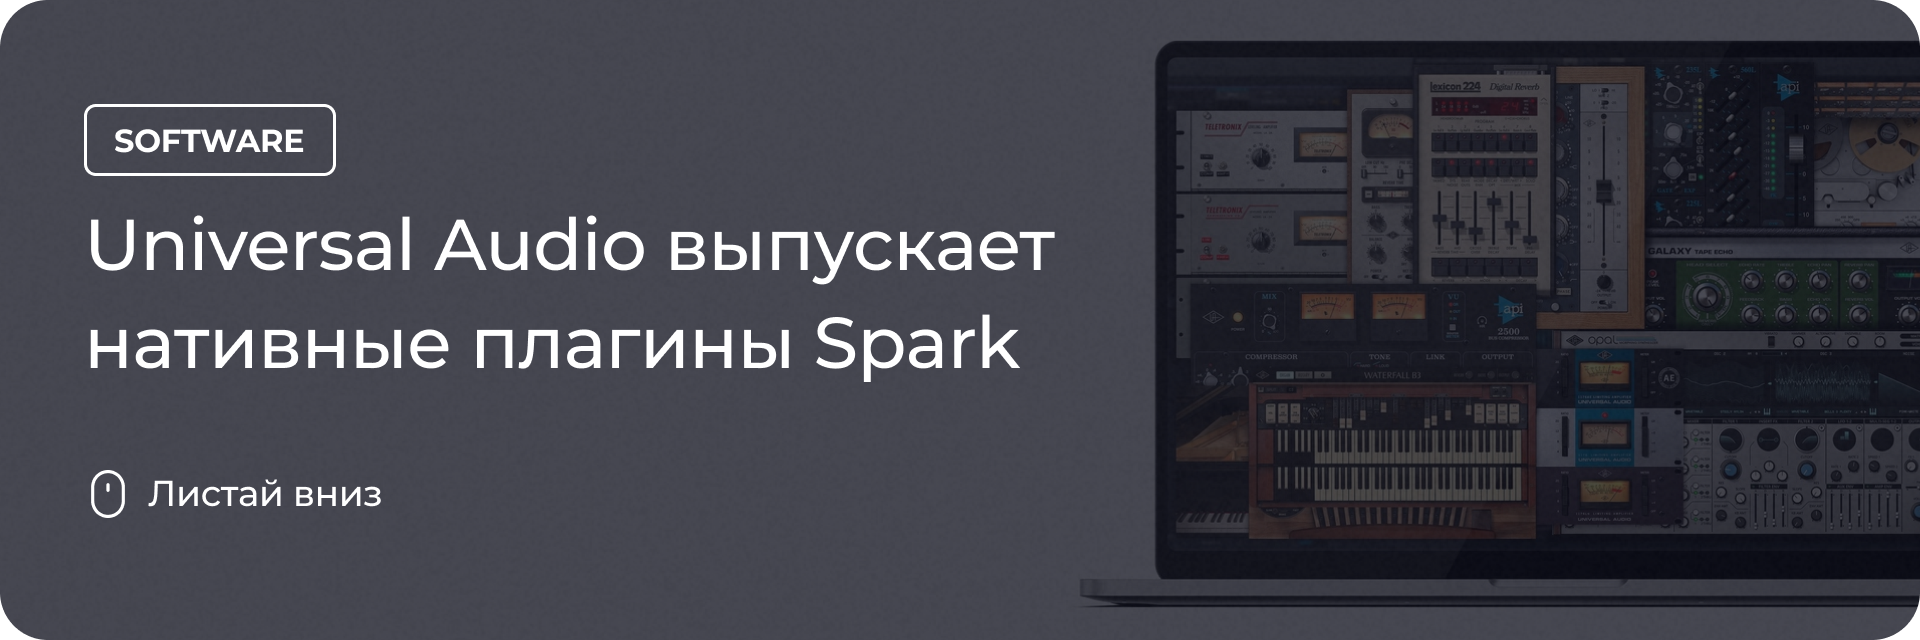 Universal Audio выпускает нативные плагины Spark